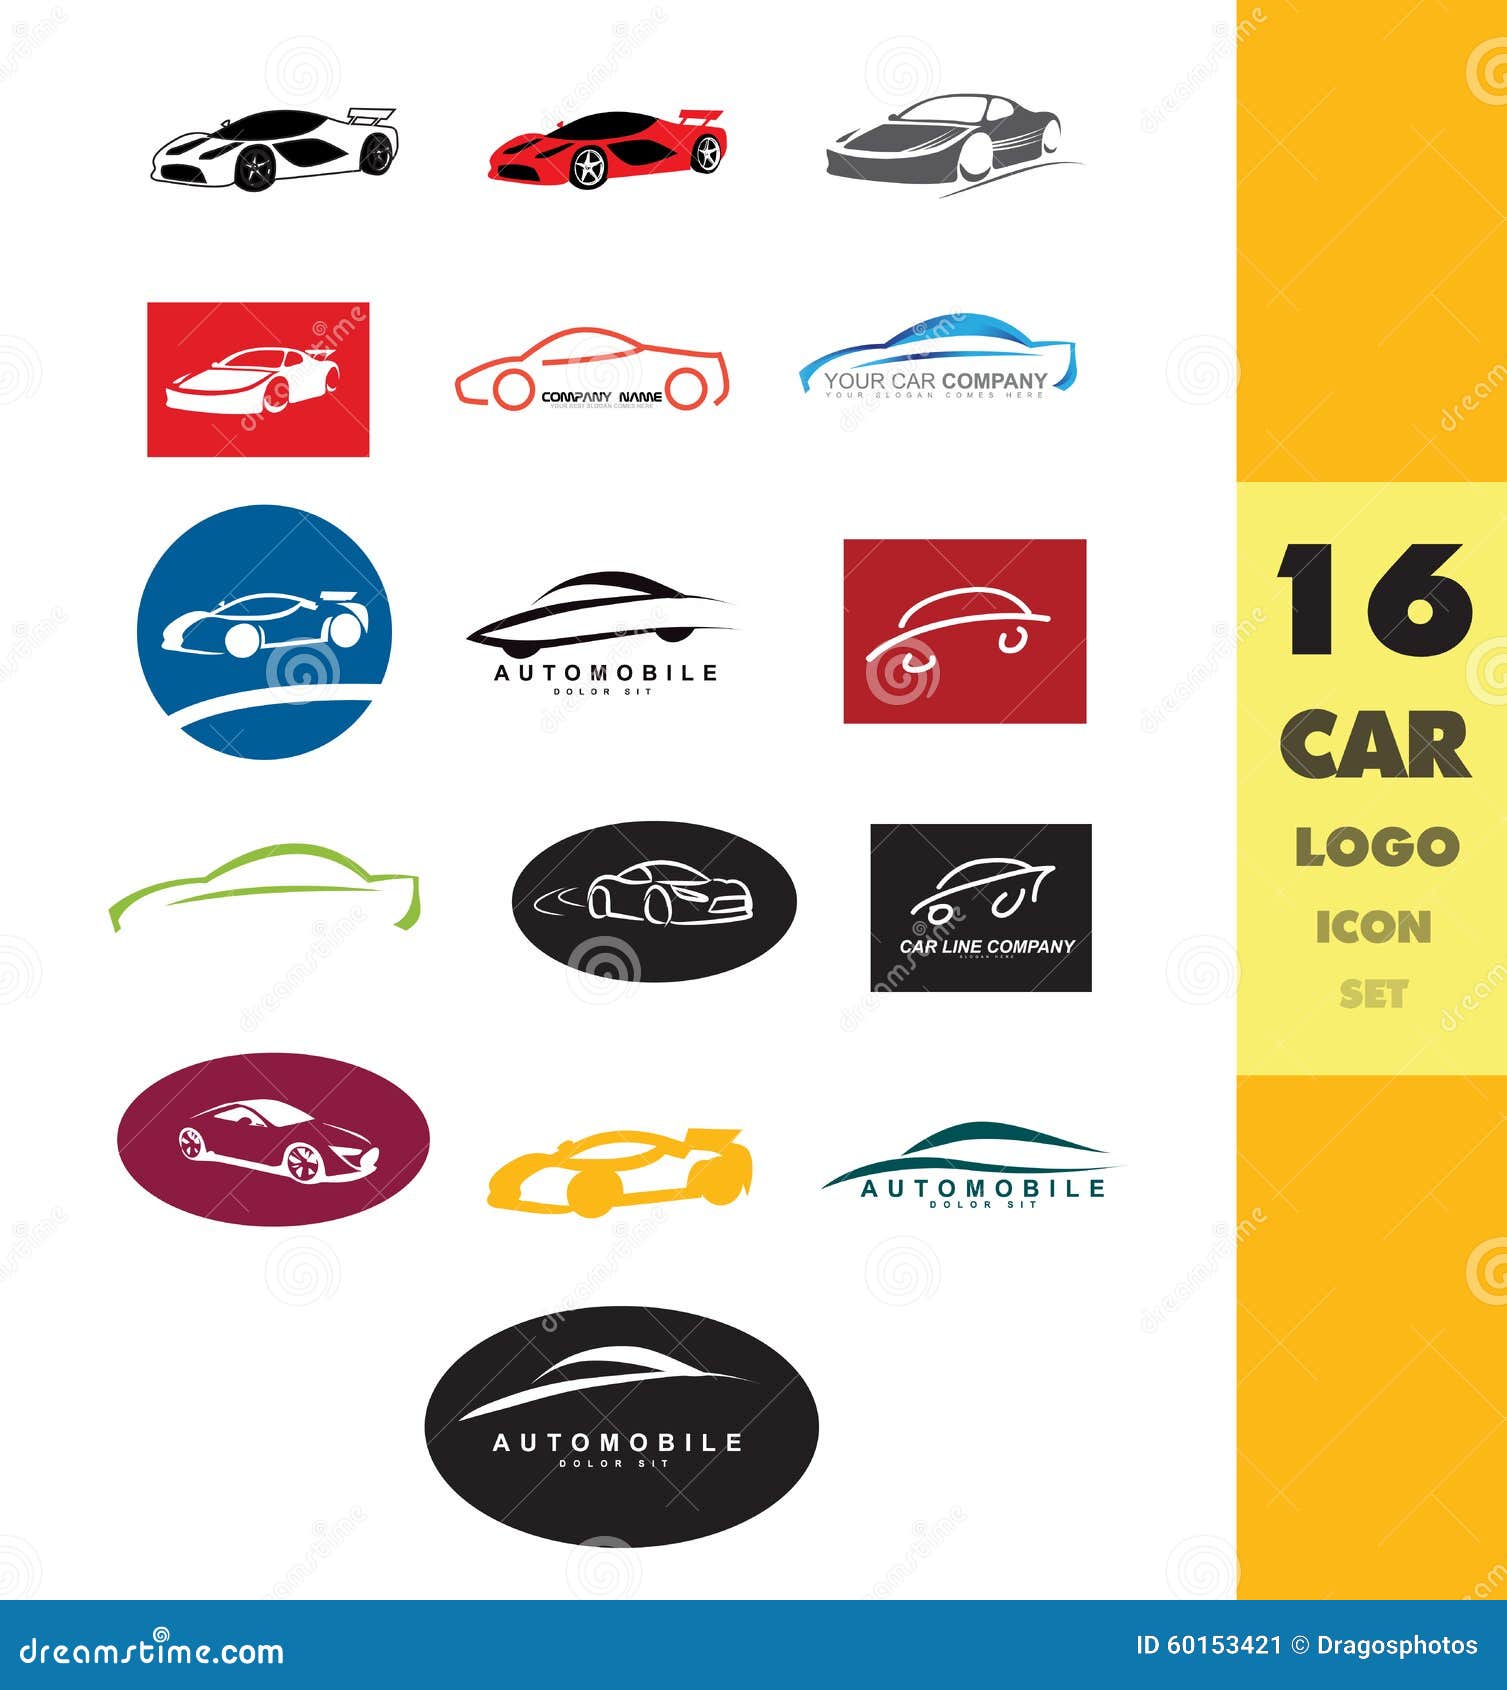 Car shape logo set stock vector. Illustration of identity - 60153421